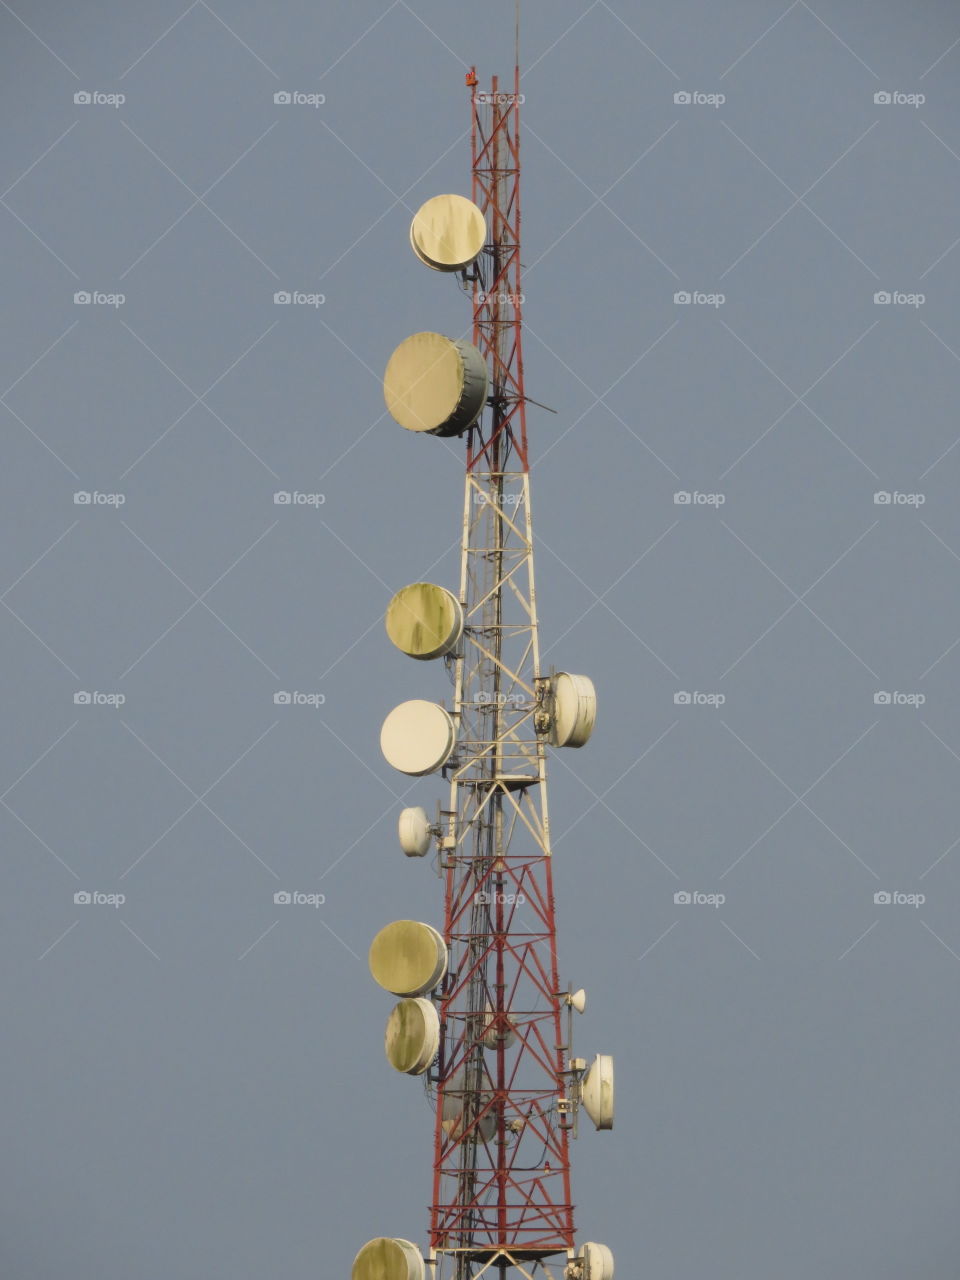 Telecom mast for data and signal